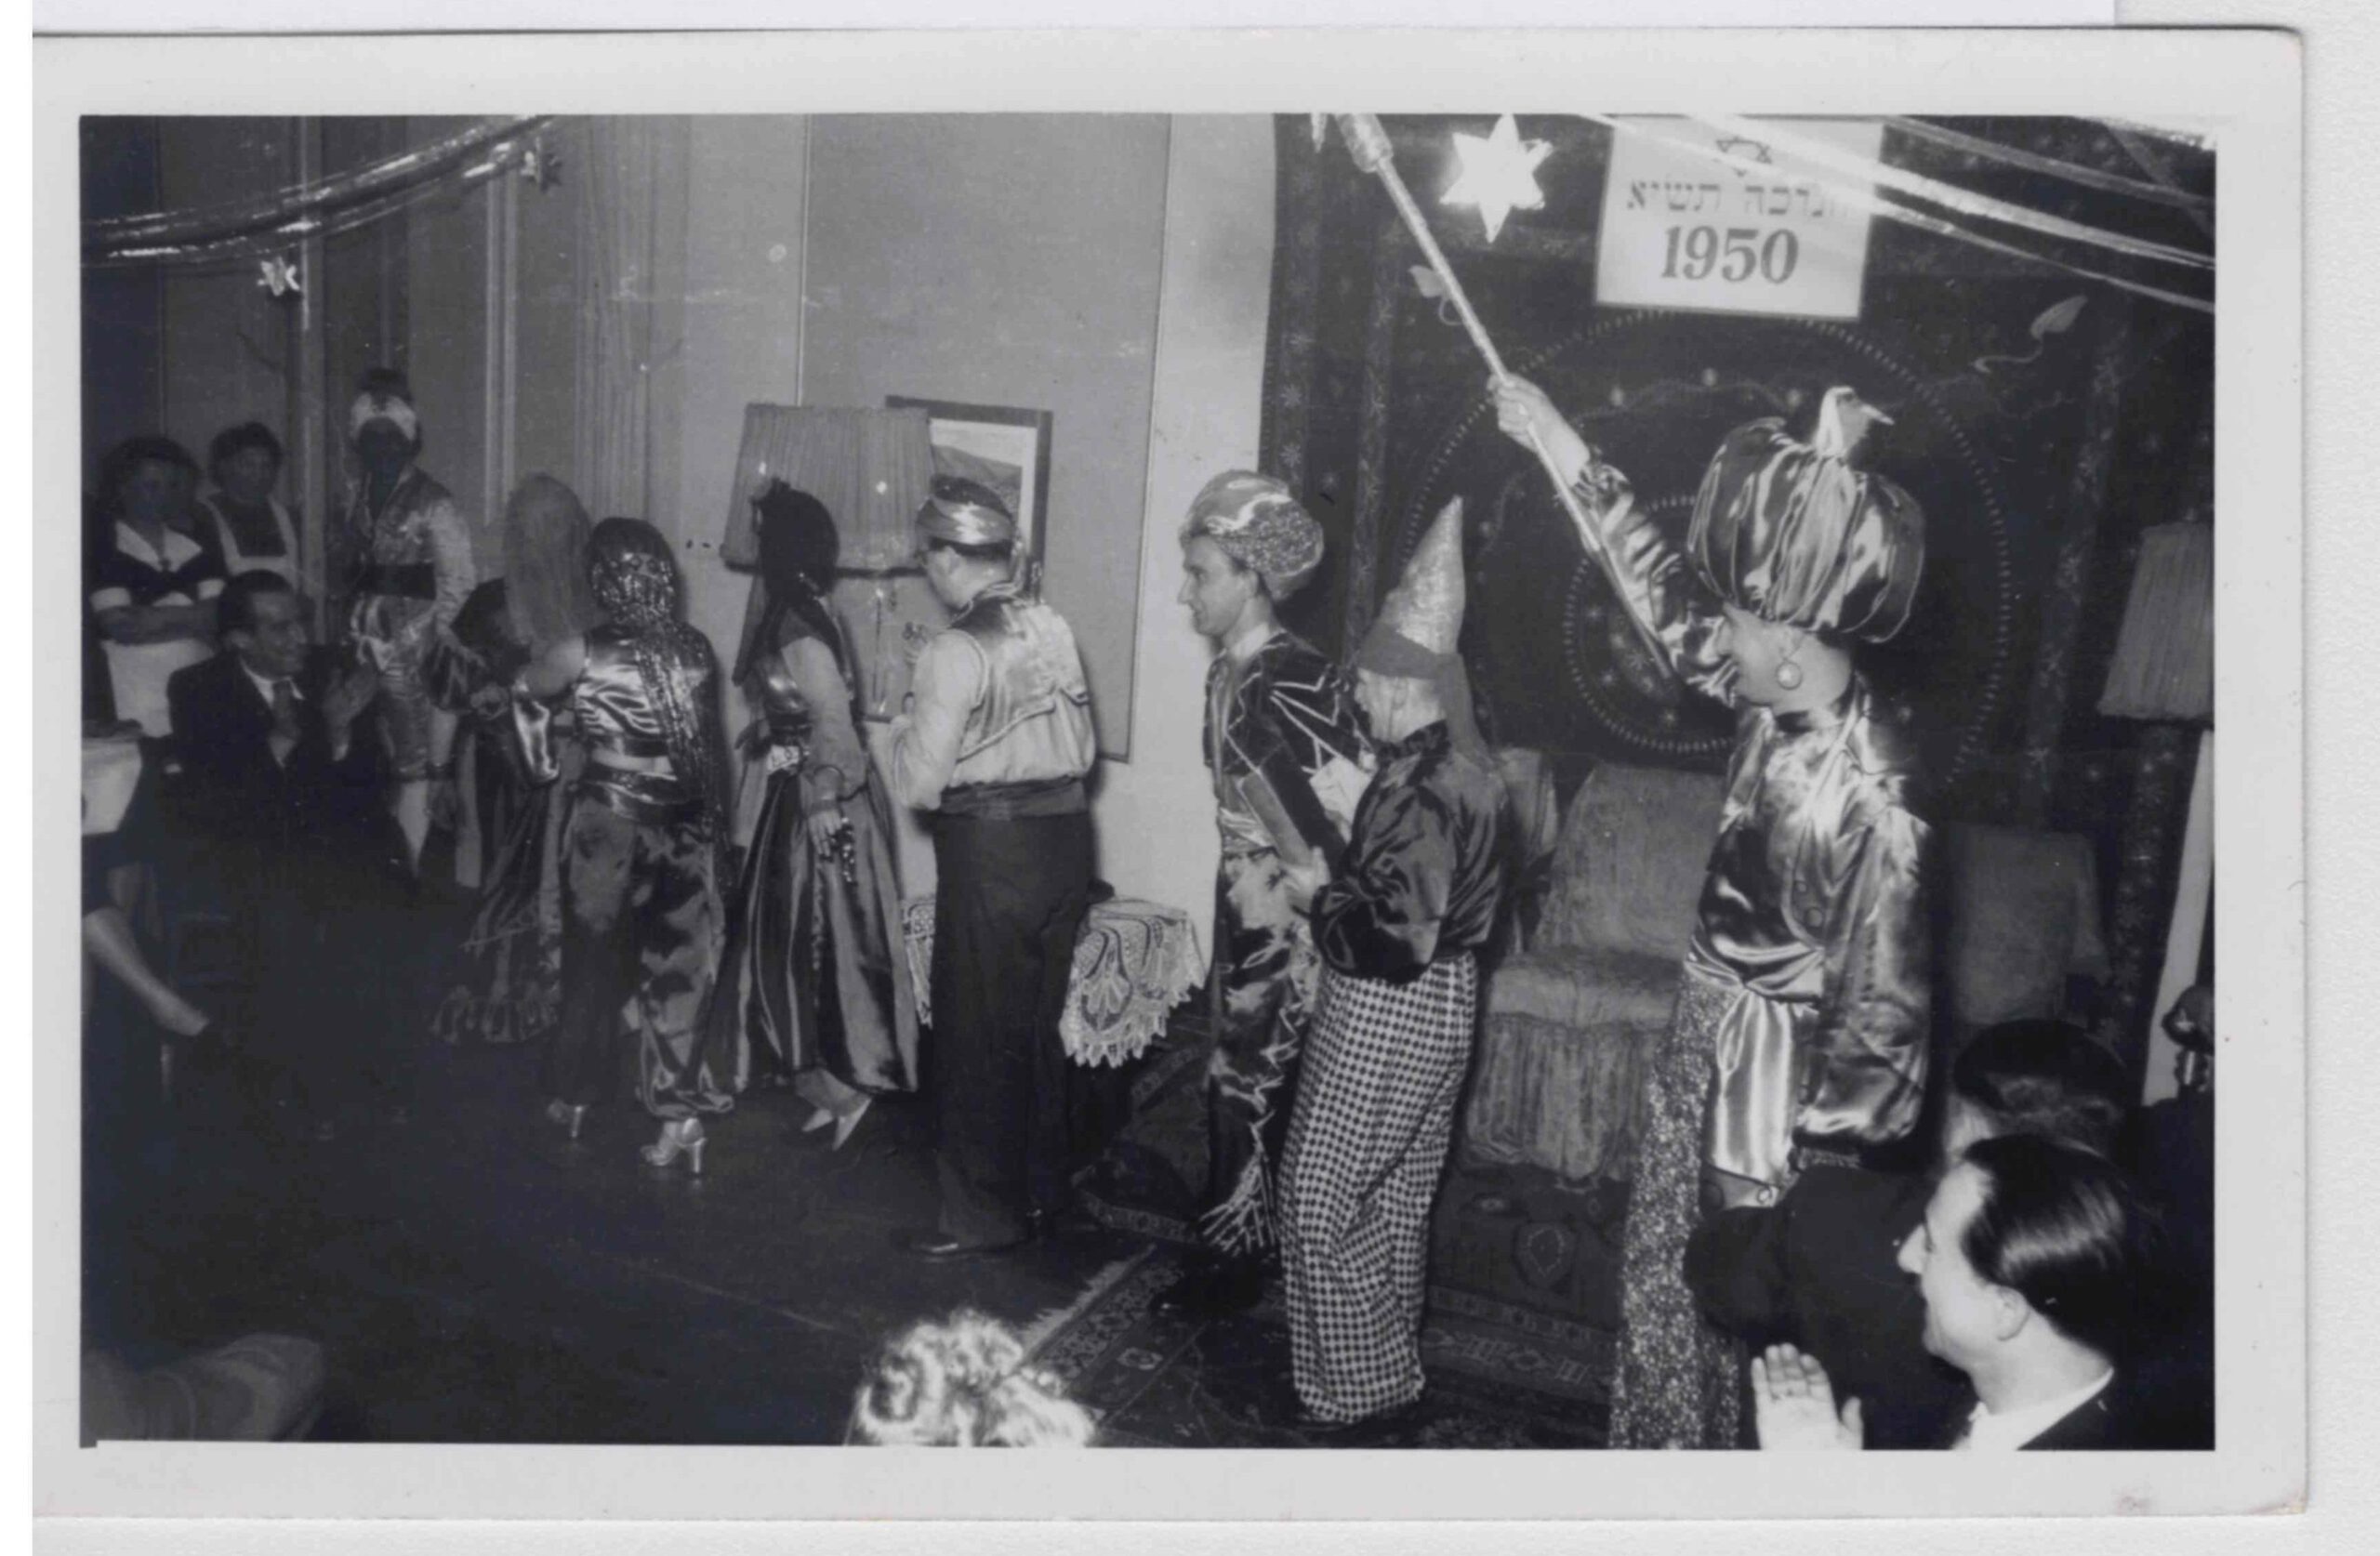 Purim festival 1950. Collection Samuel Mandelbaum